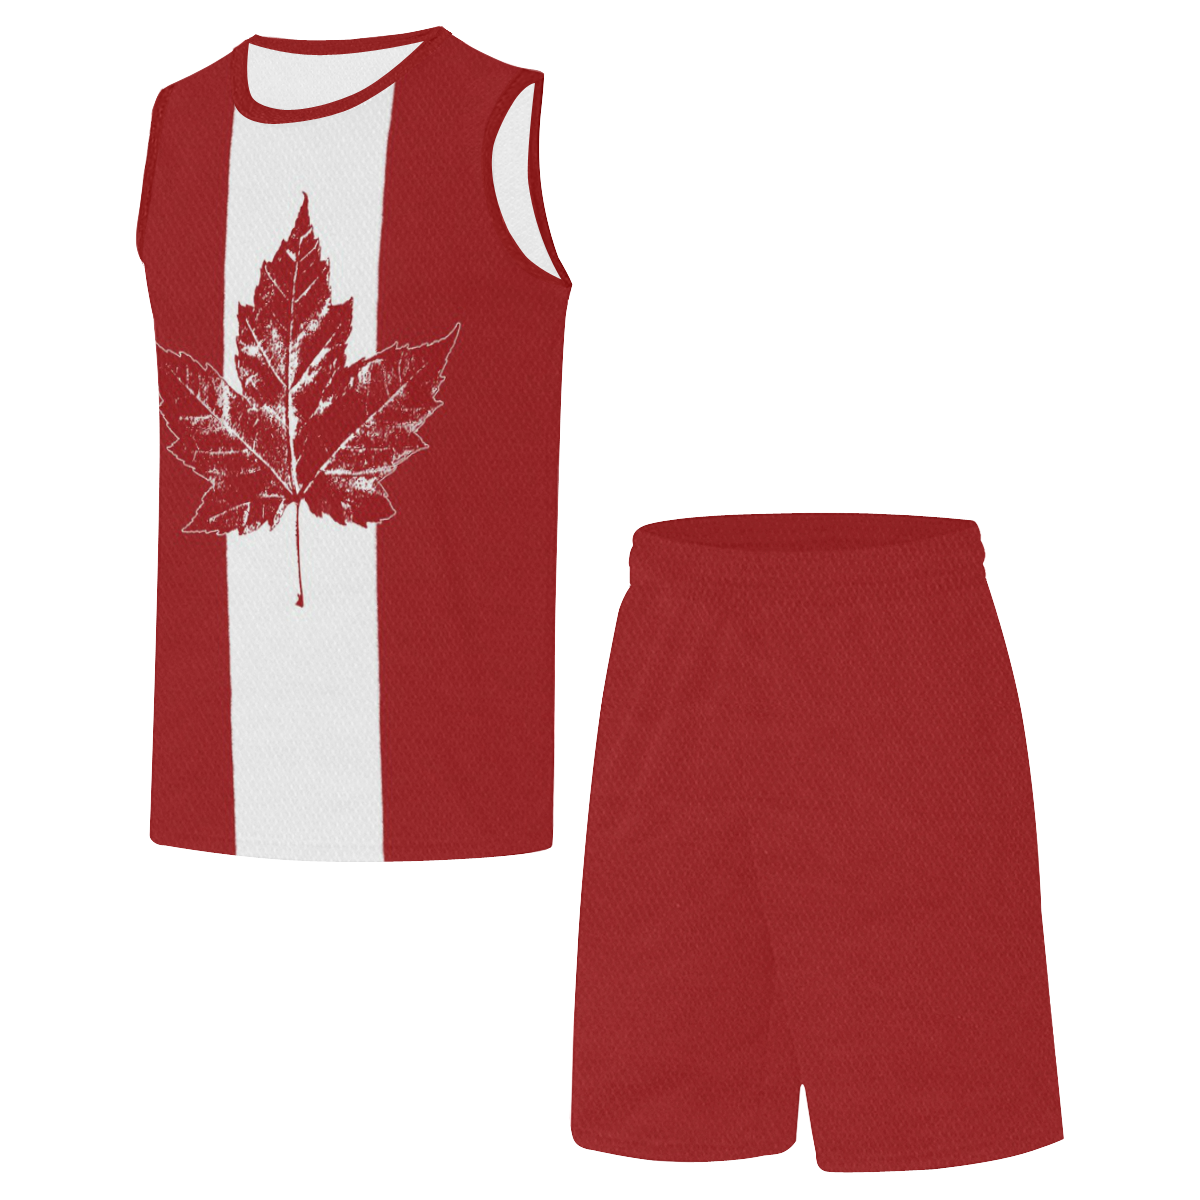 Cool Canada Basketball Uniforms Retro All Over Print Basketball Uniform